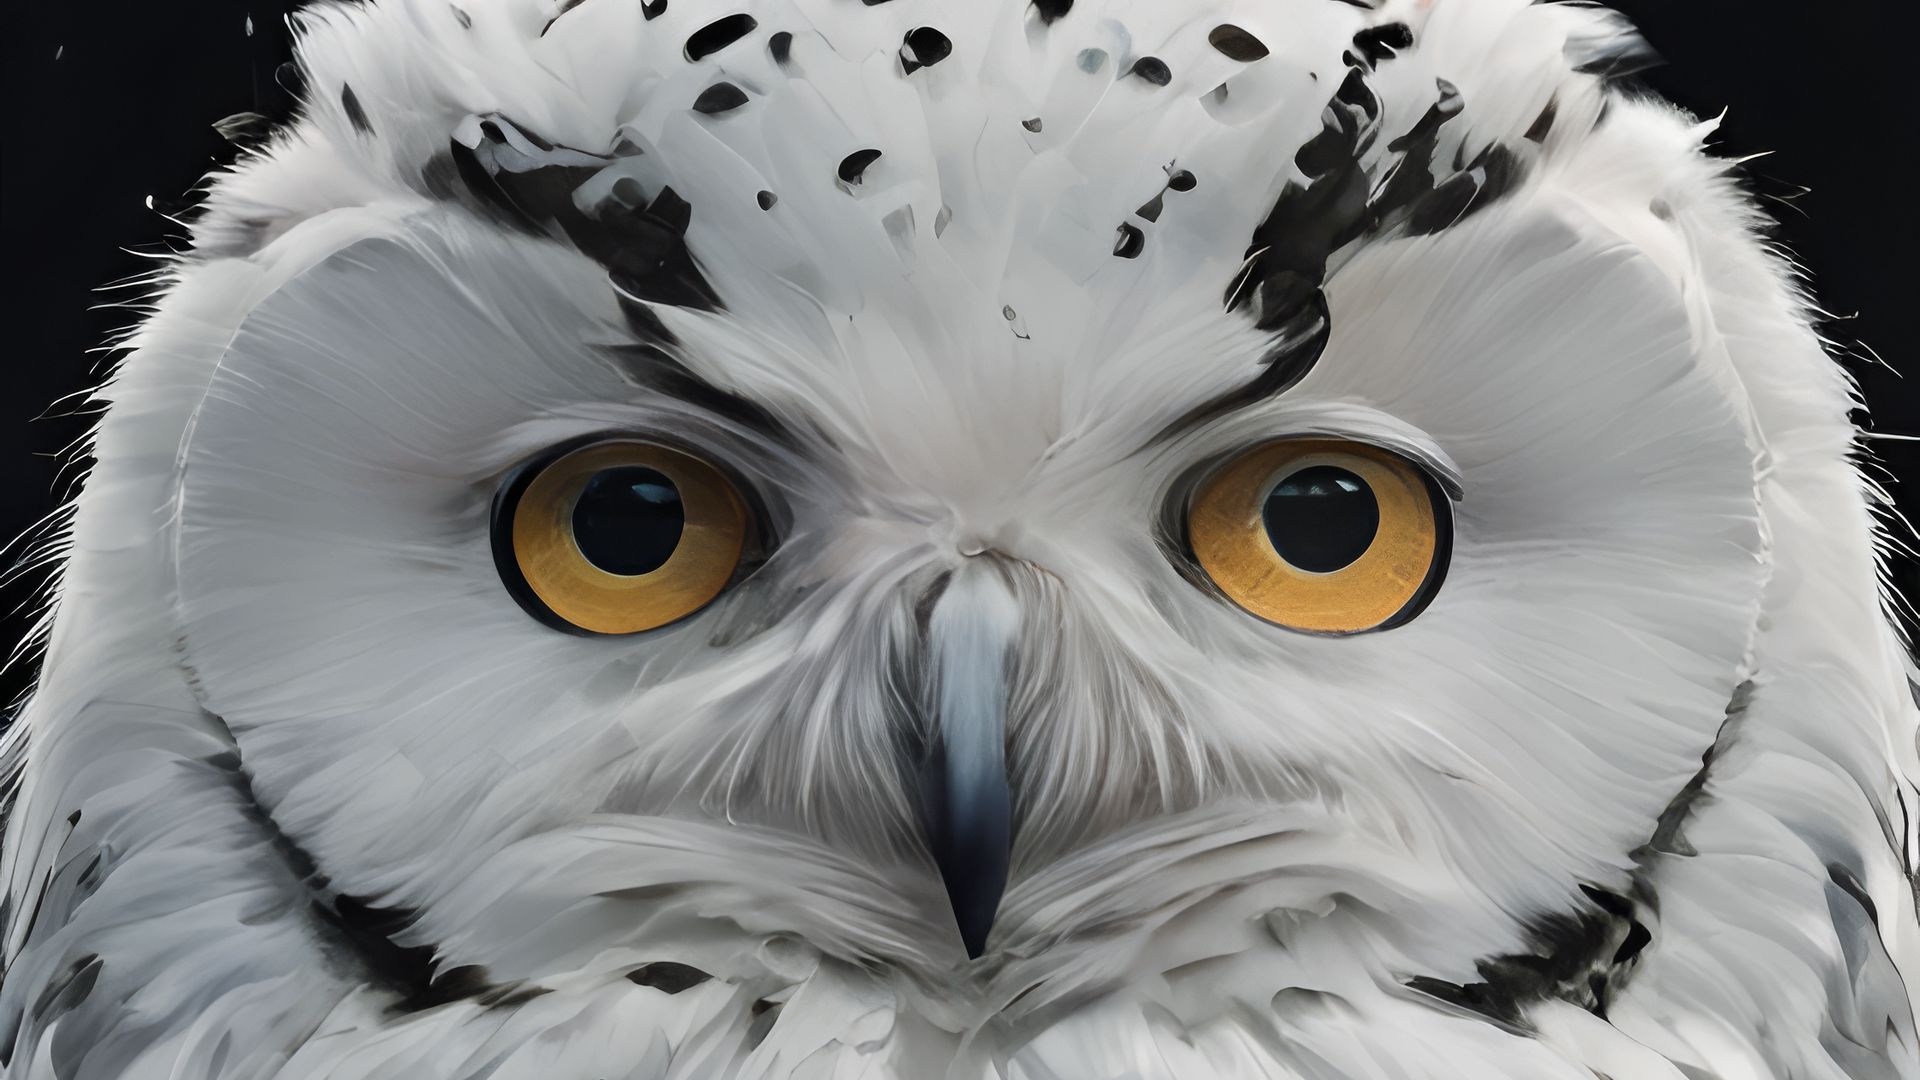 Download wallpaper 1920x1080 owl, bird, white, feathers, snow, winter ...